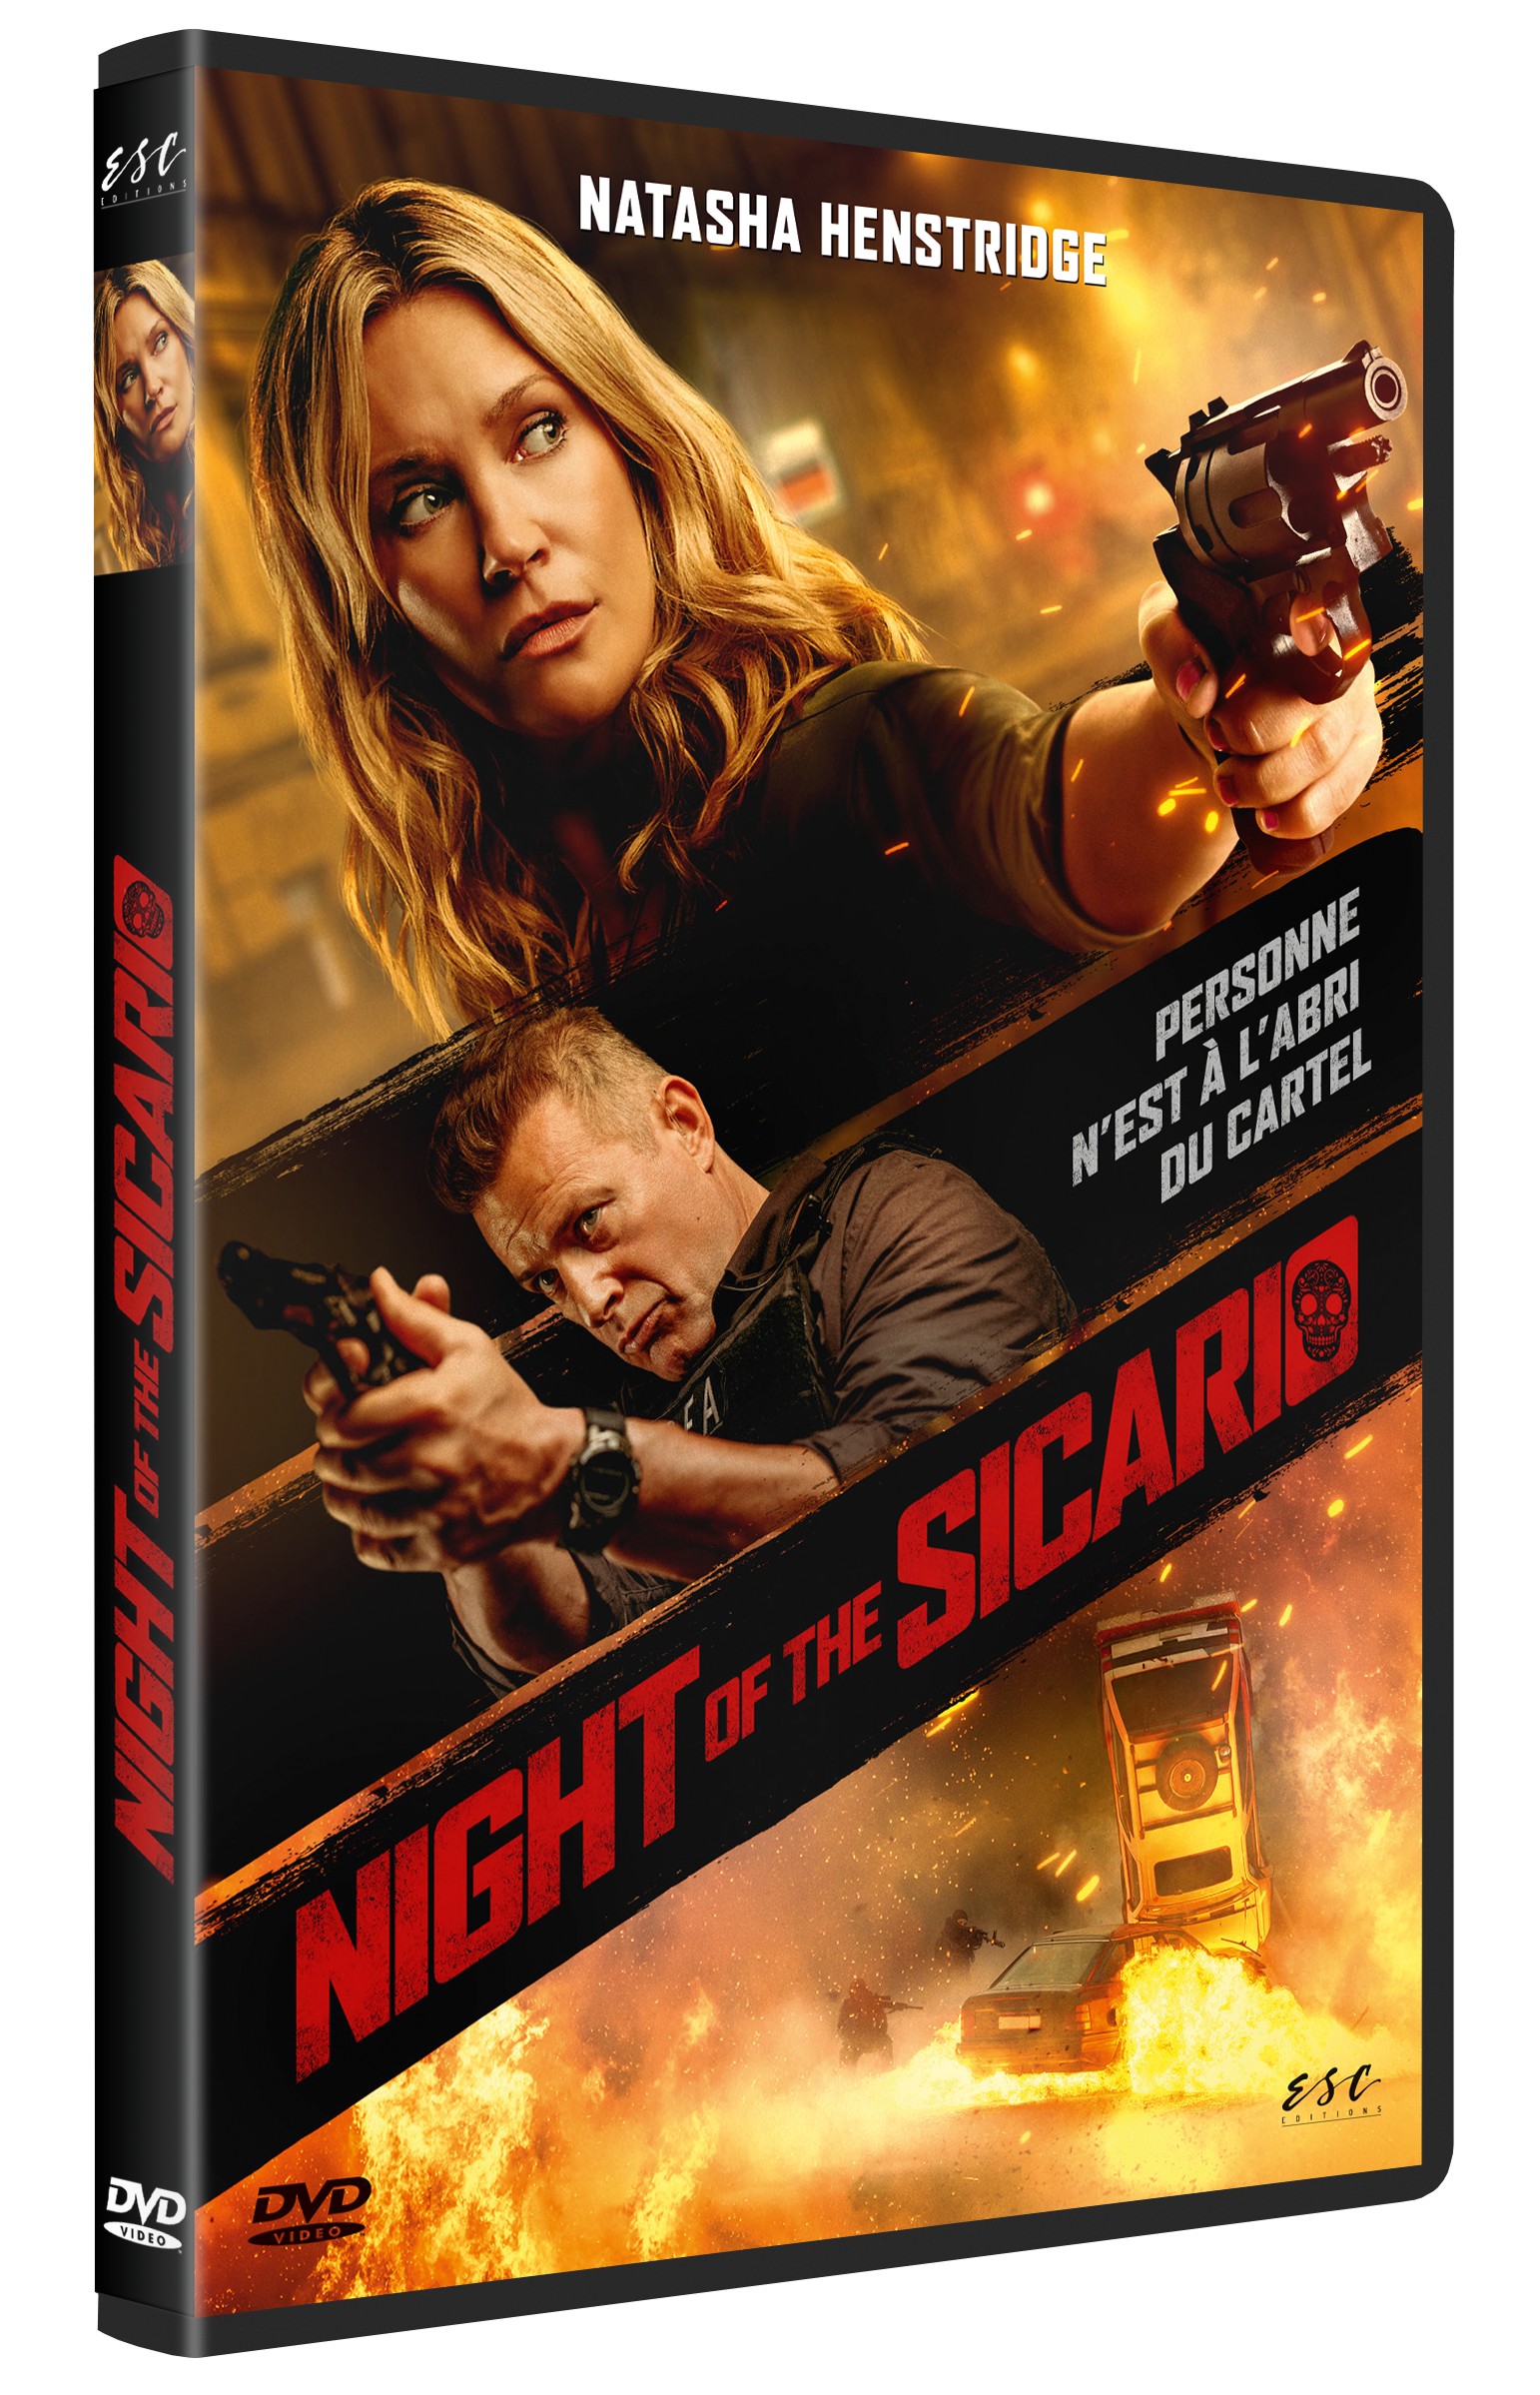 NIGHT OF THE SICARIO - DVD